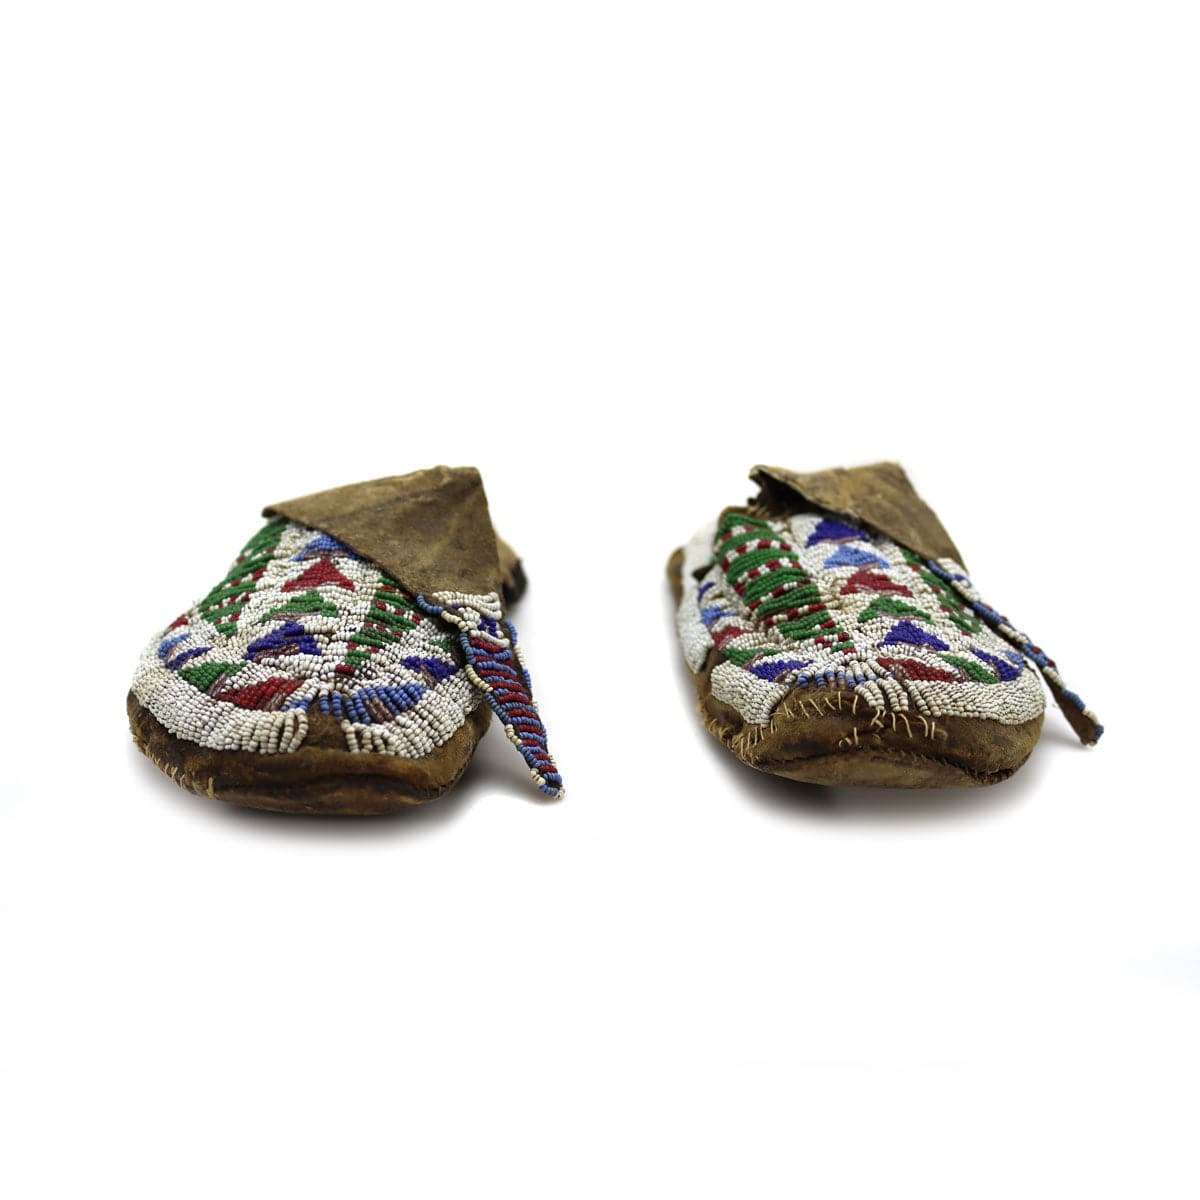 Lakota Leather Beaded Moccasins c. 1900s, 2.5" x 10" x 4" (DW1292)1